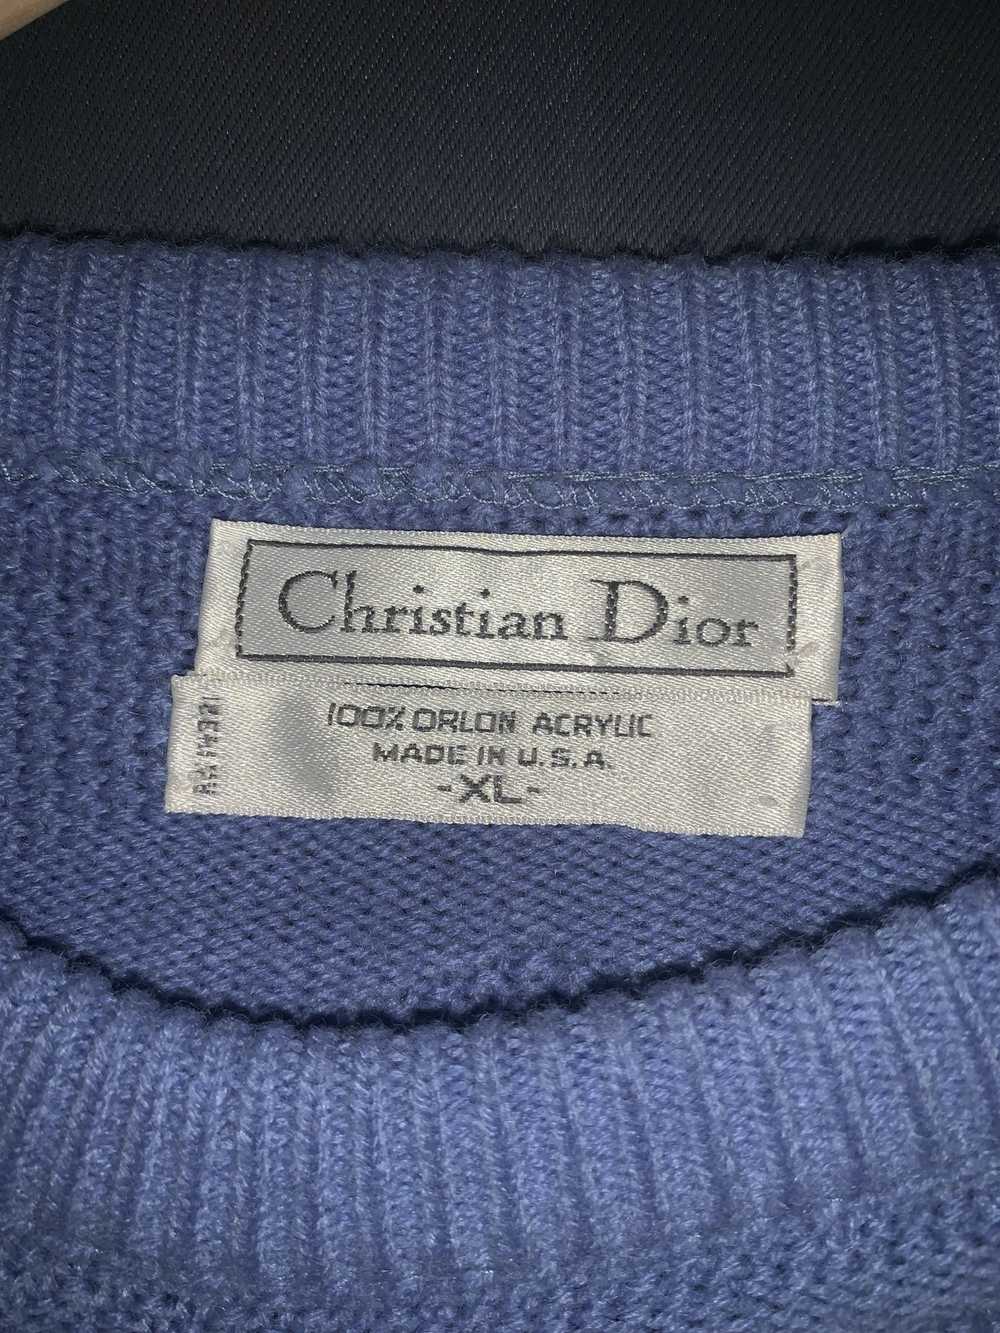 Christian Dior Monsieur Vintage Christian Dior Kn… - image 2